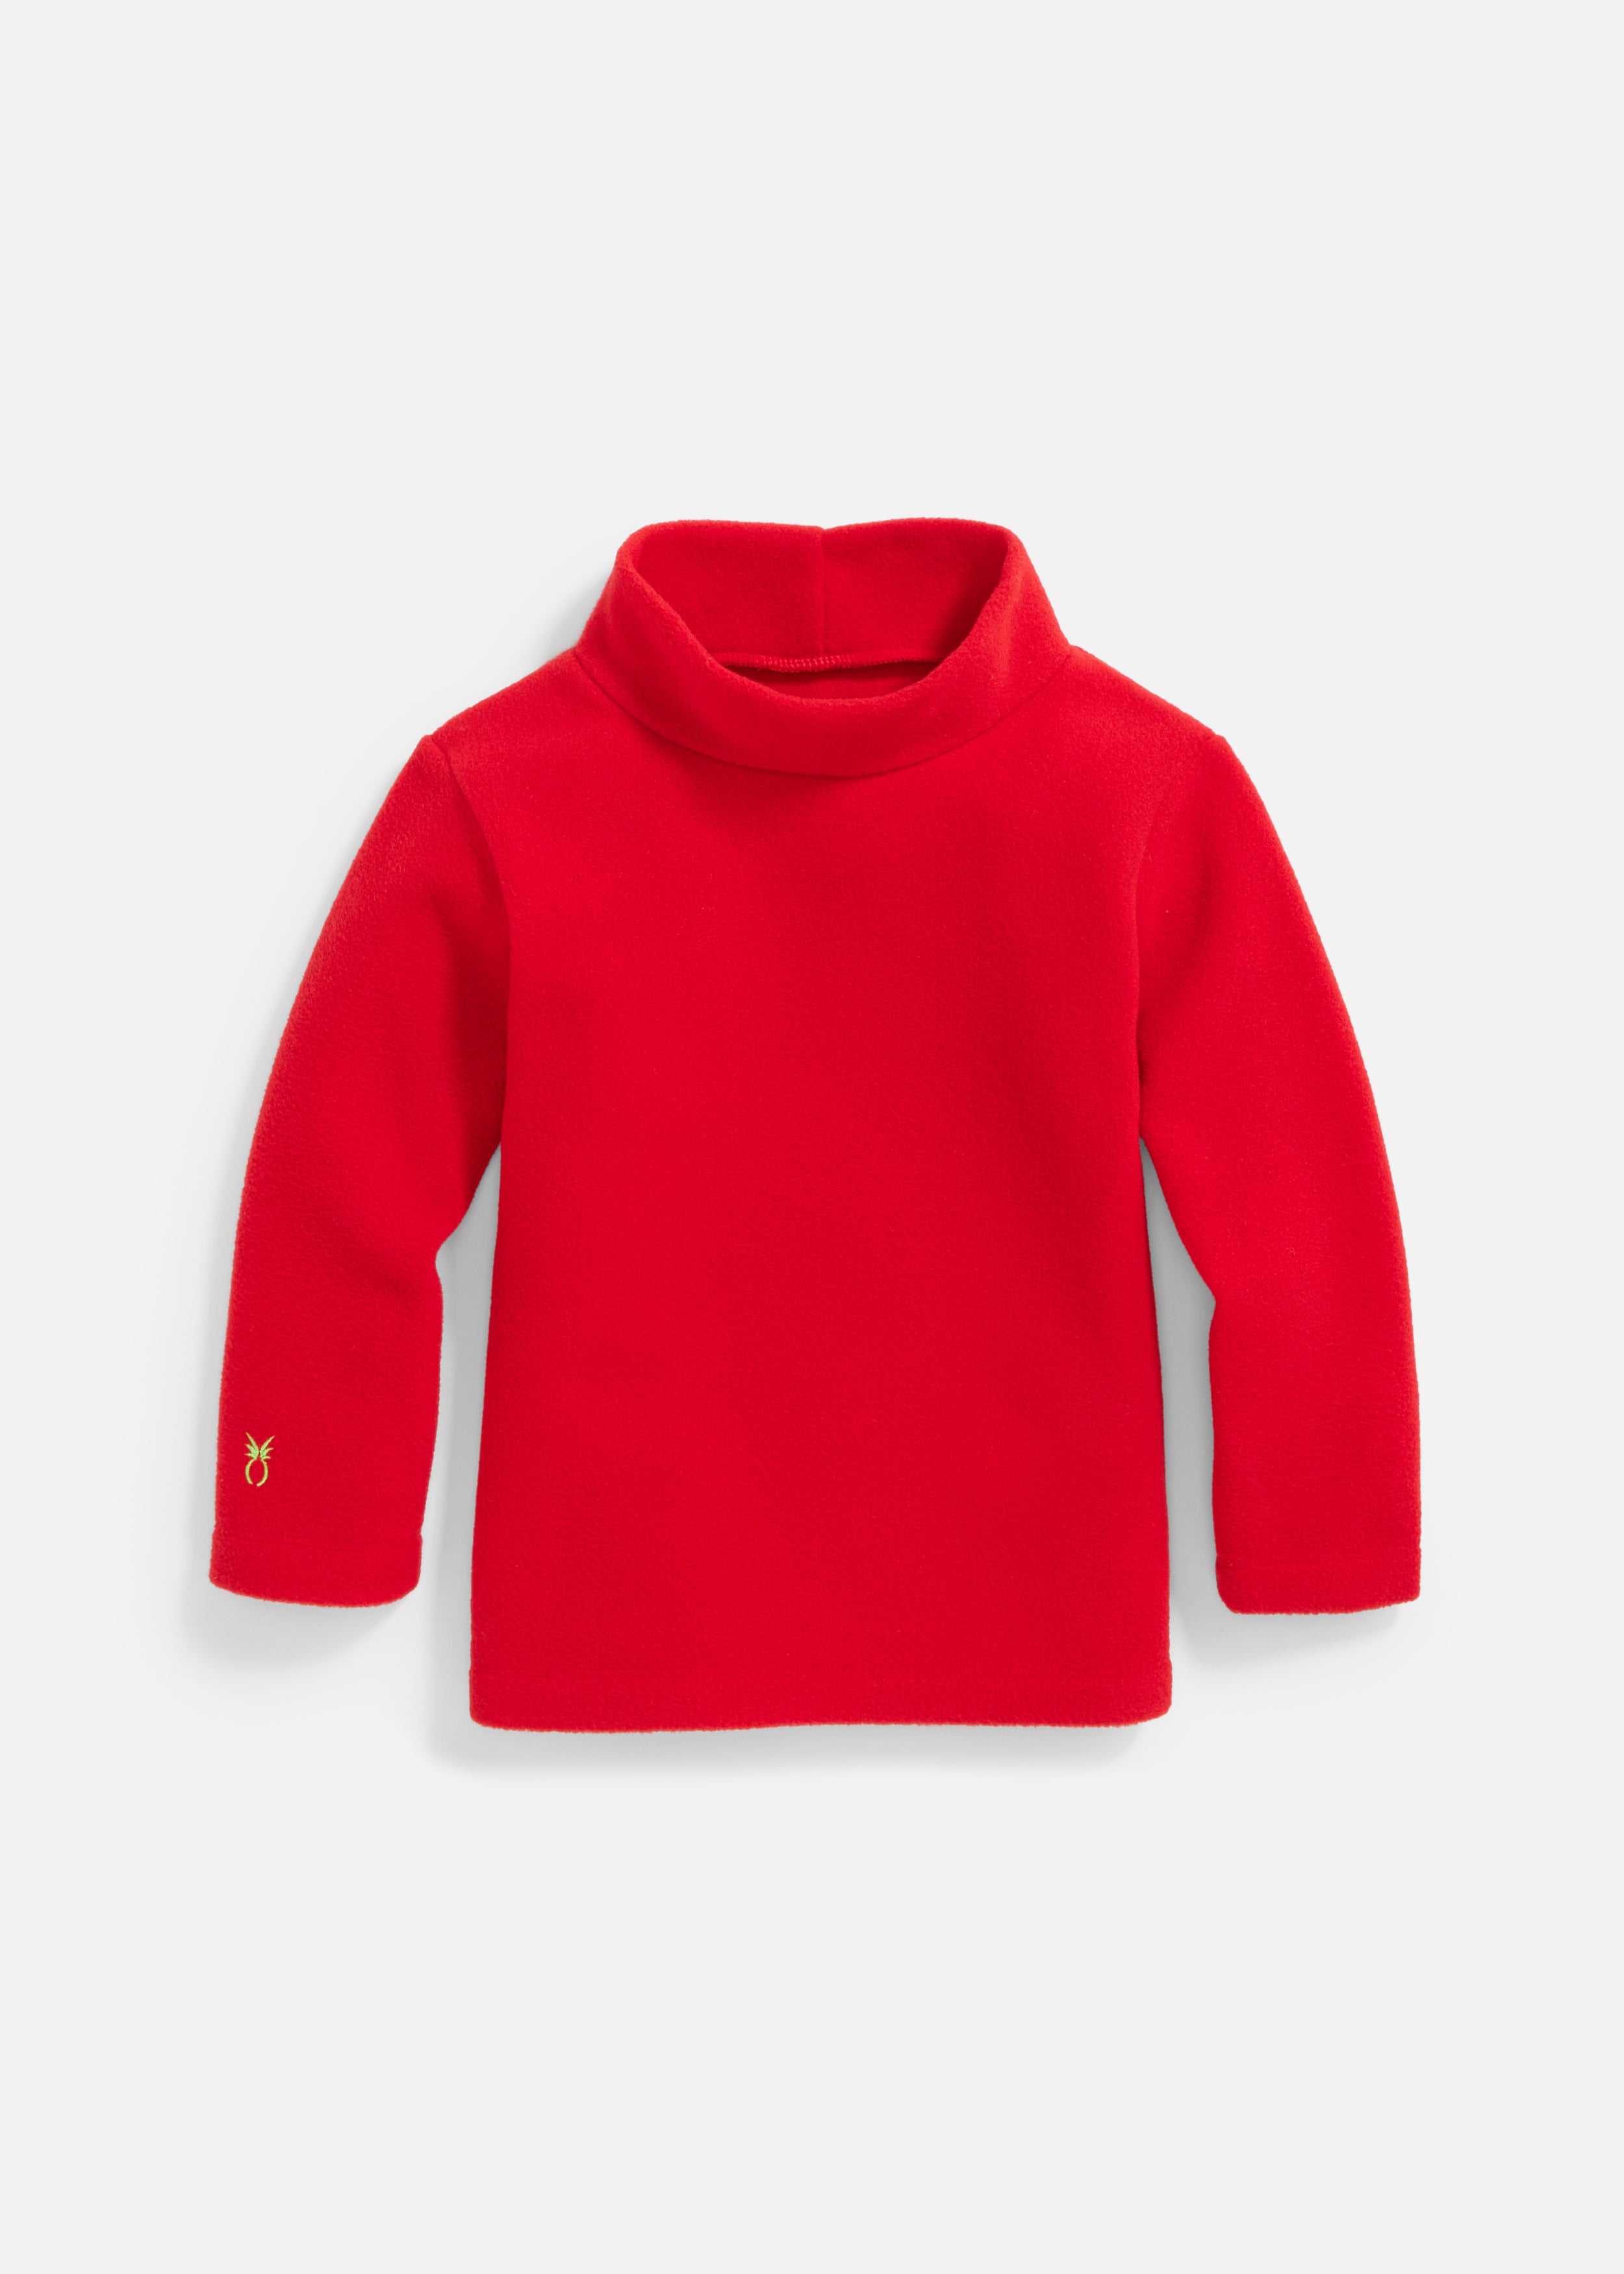 Toddler Turtleneck in Vello Fleece (Red) – Dudley Stephens